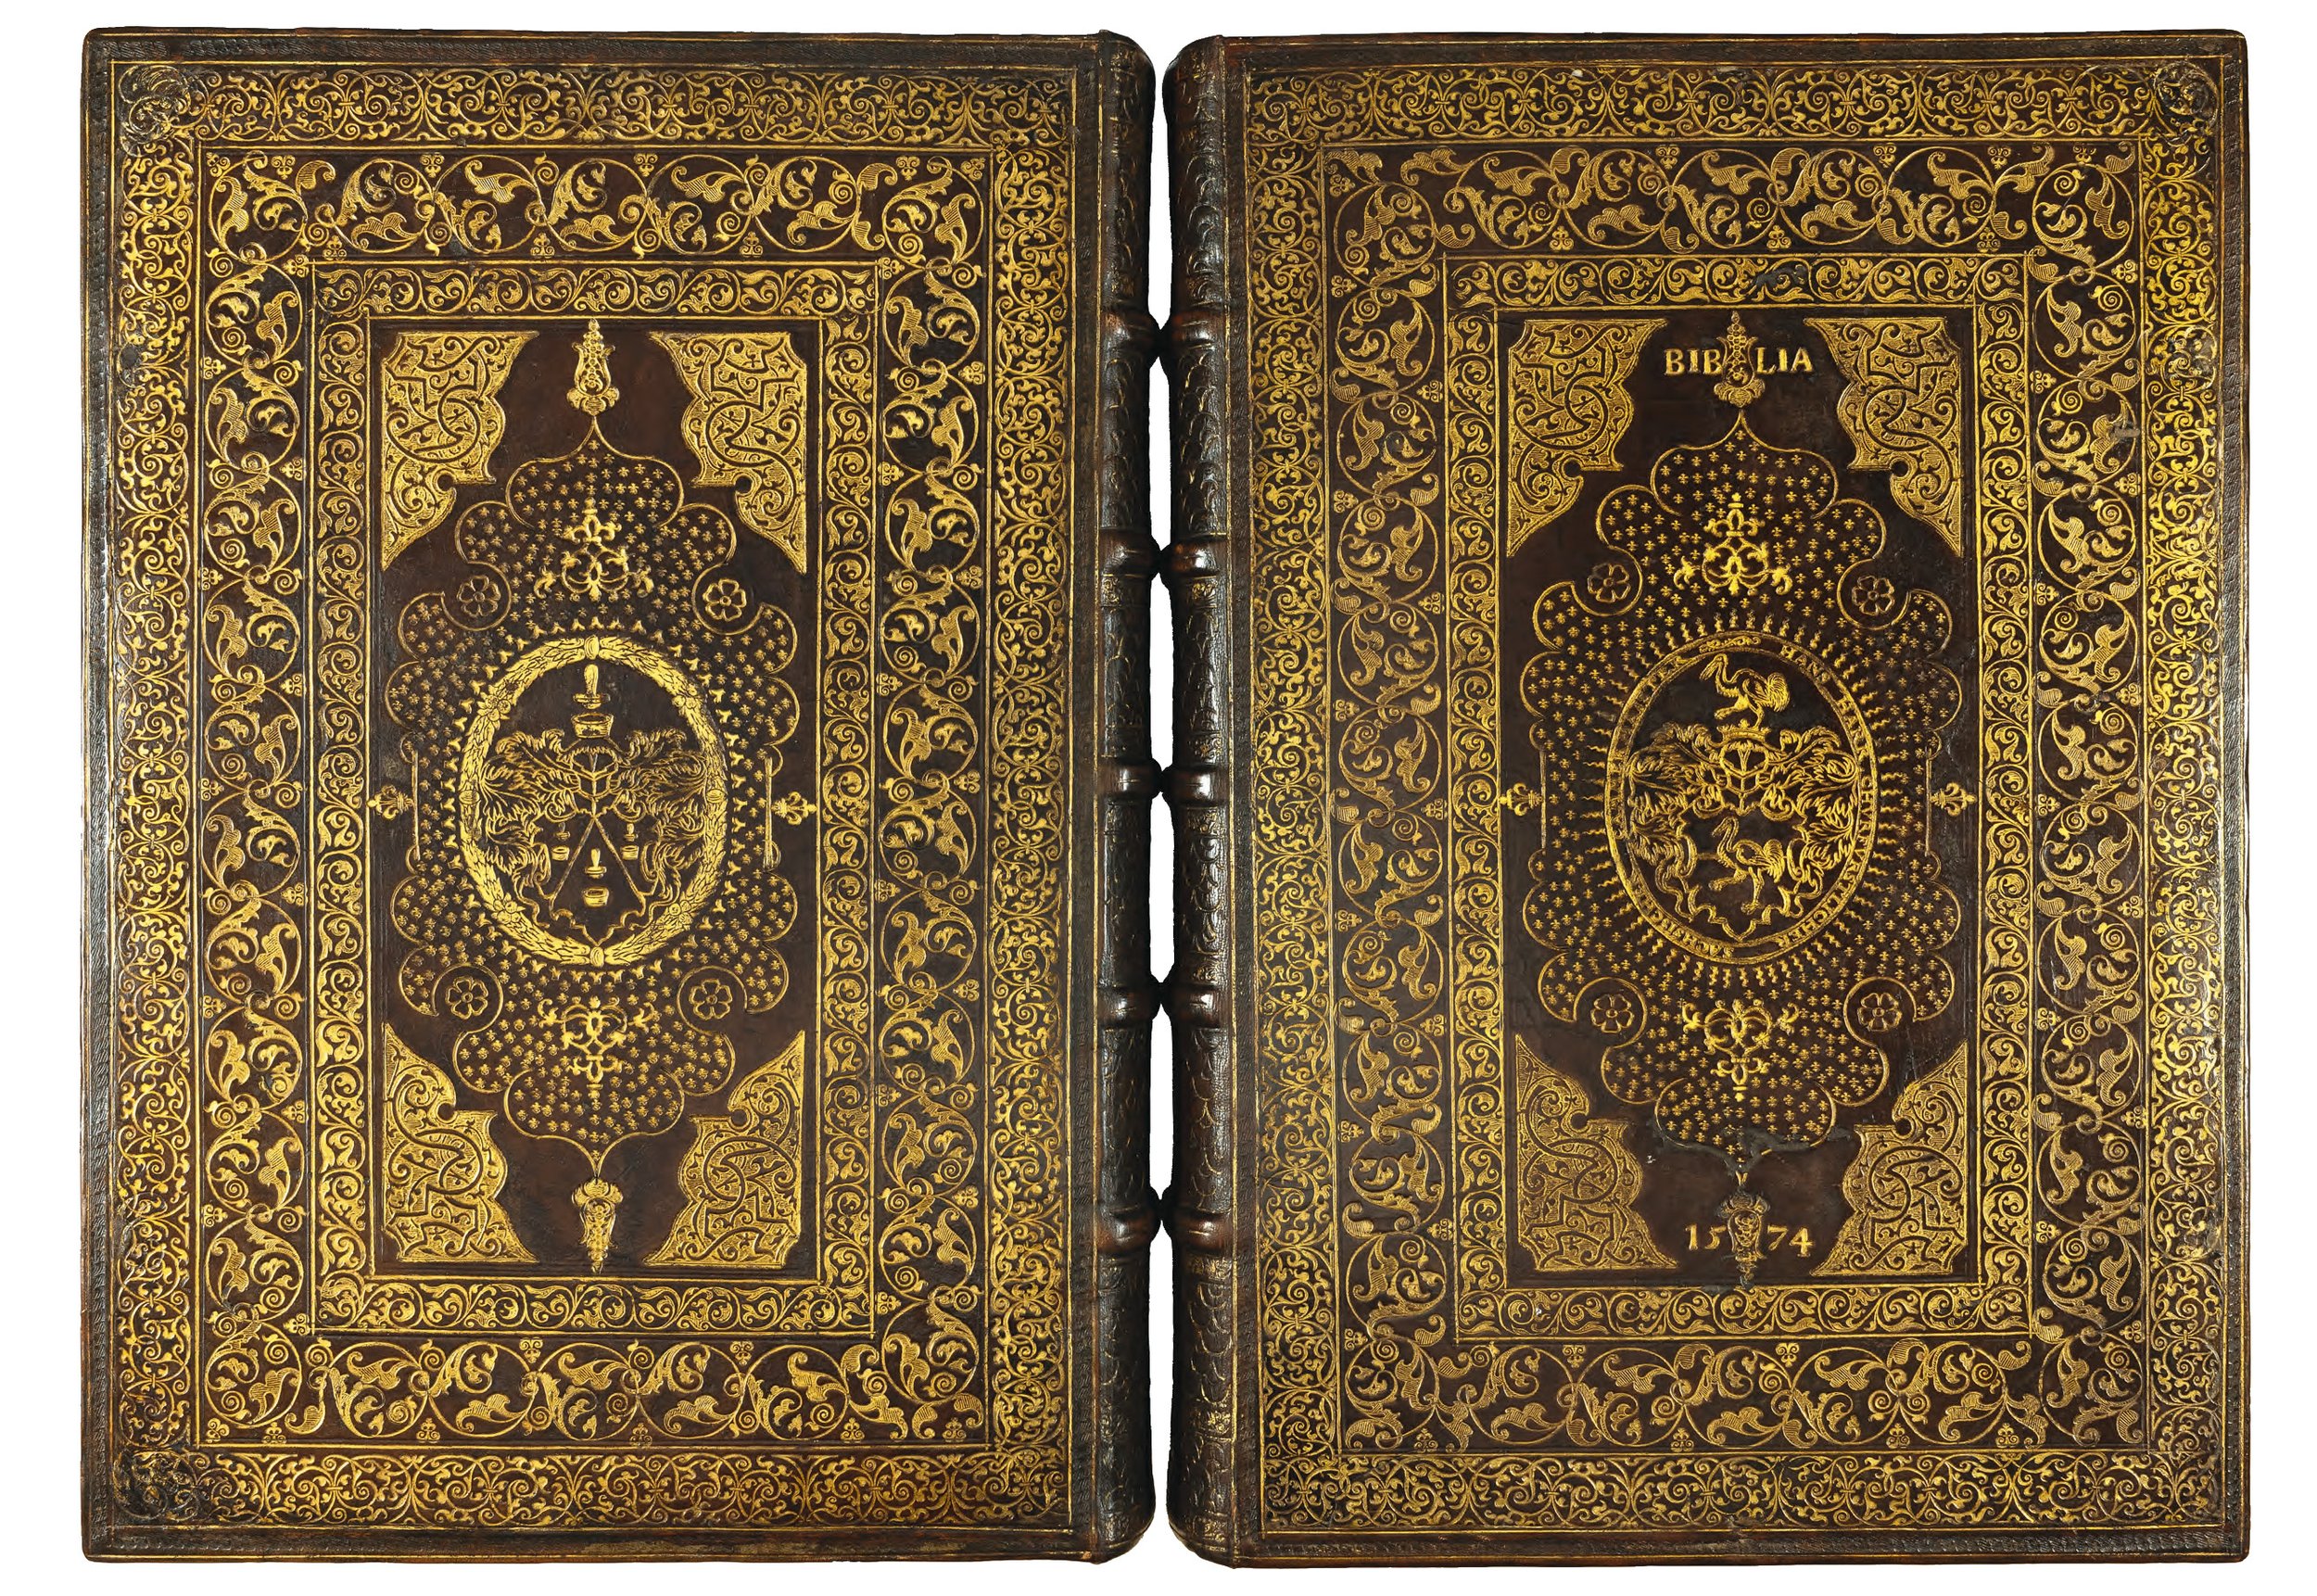 099a Montaigne Essais 1595 gilt morocco binding by Lortic